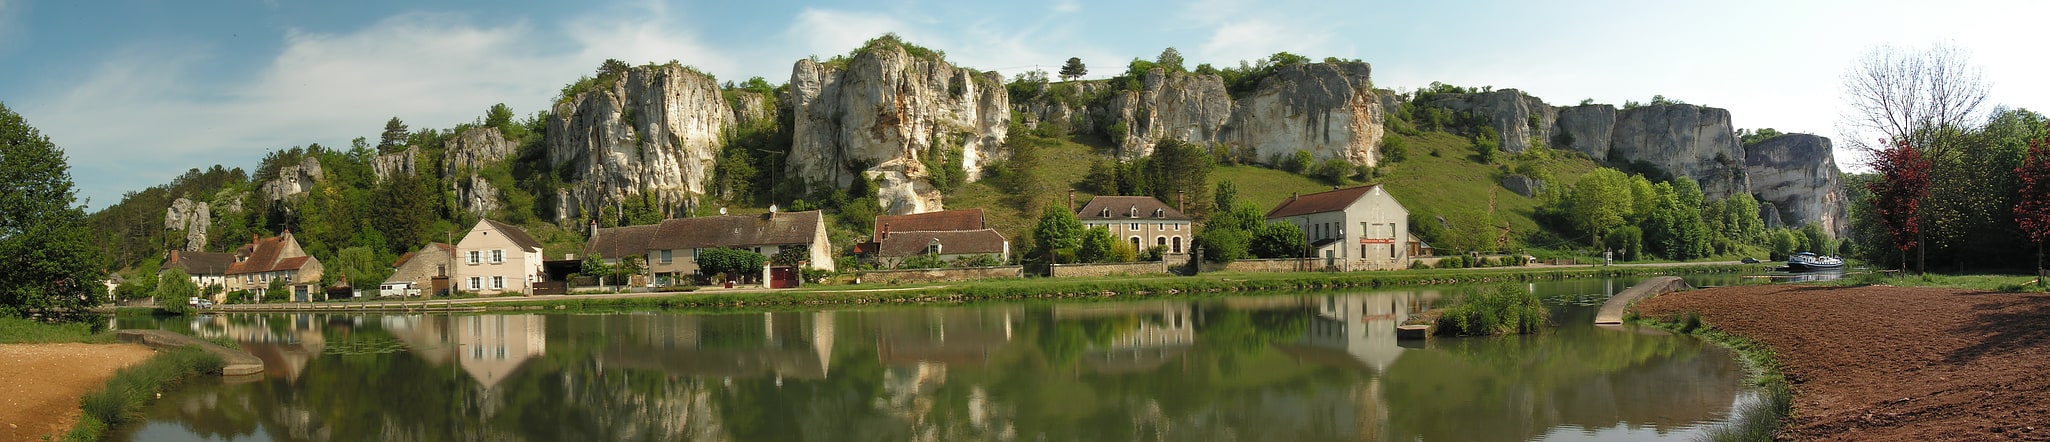 Merry-sur-Yonne, France